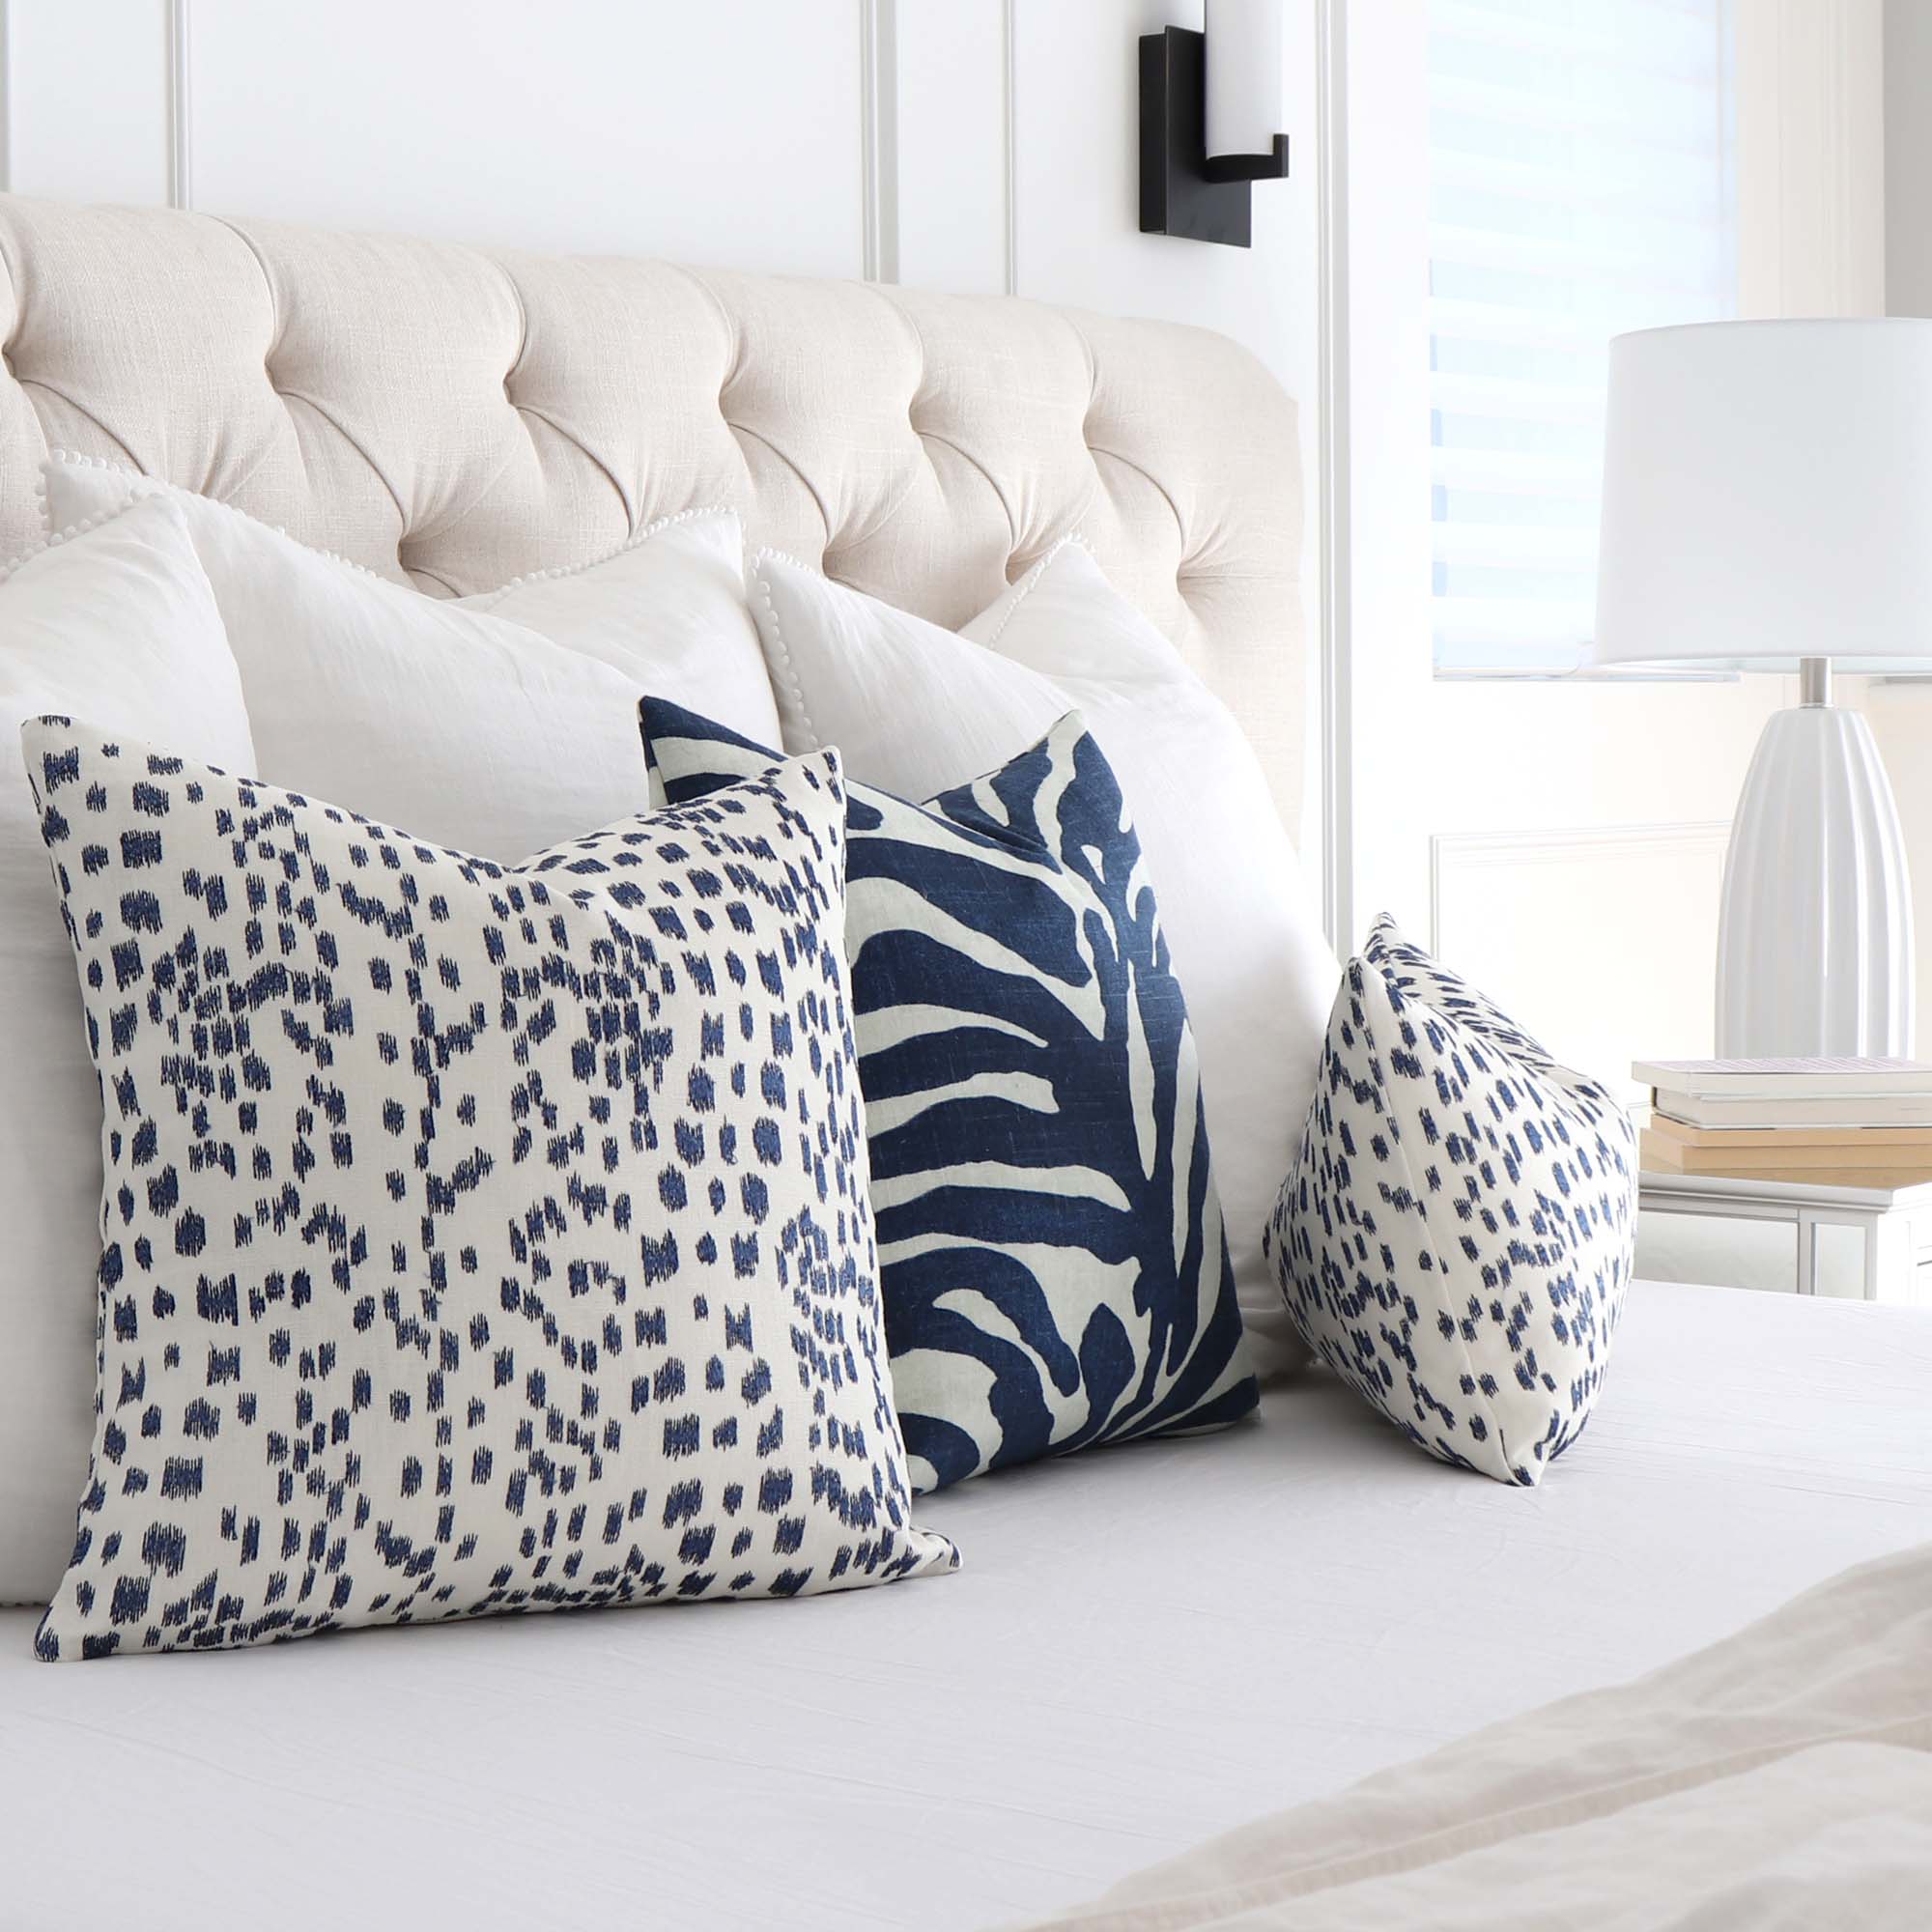 Brunschwig Fils Les Touches Embroidered Indigo Blue Luxury Designer Throw Pillow Cover